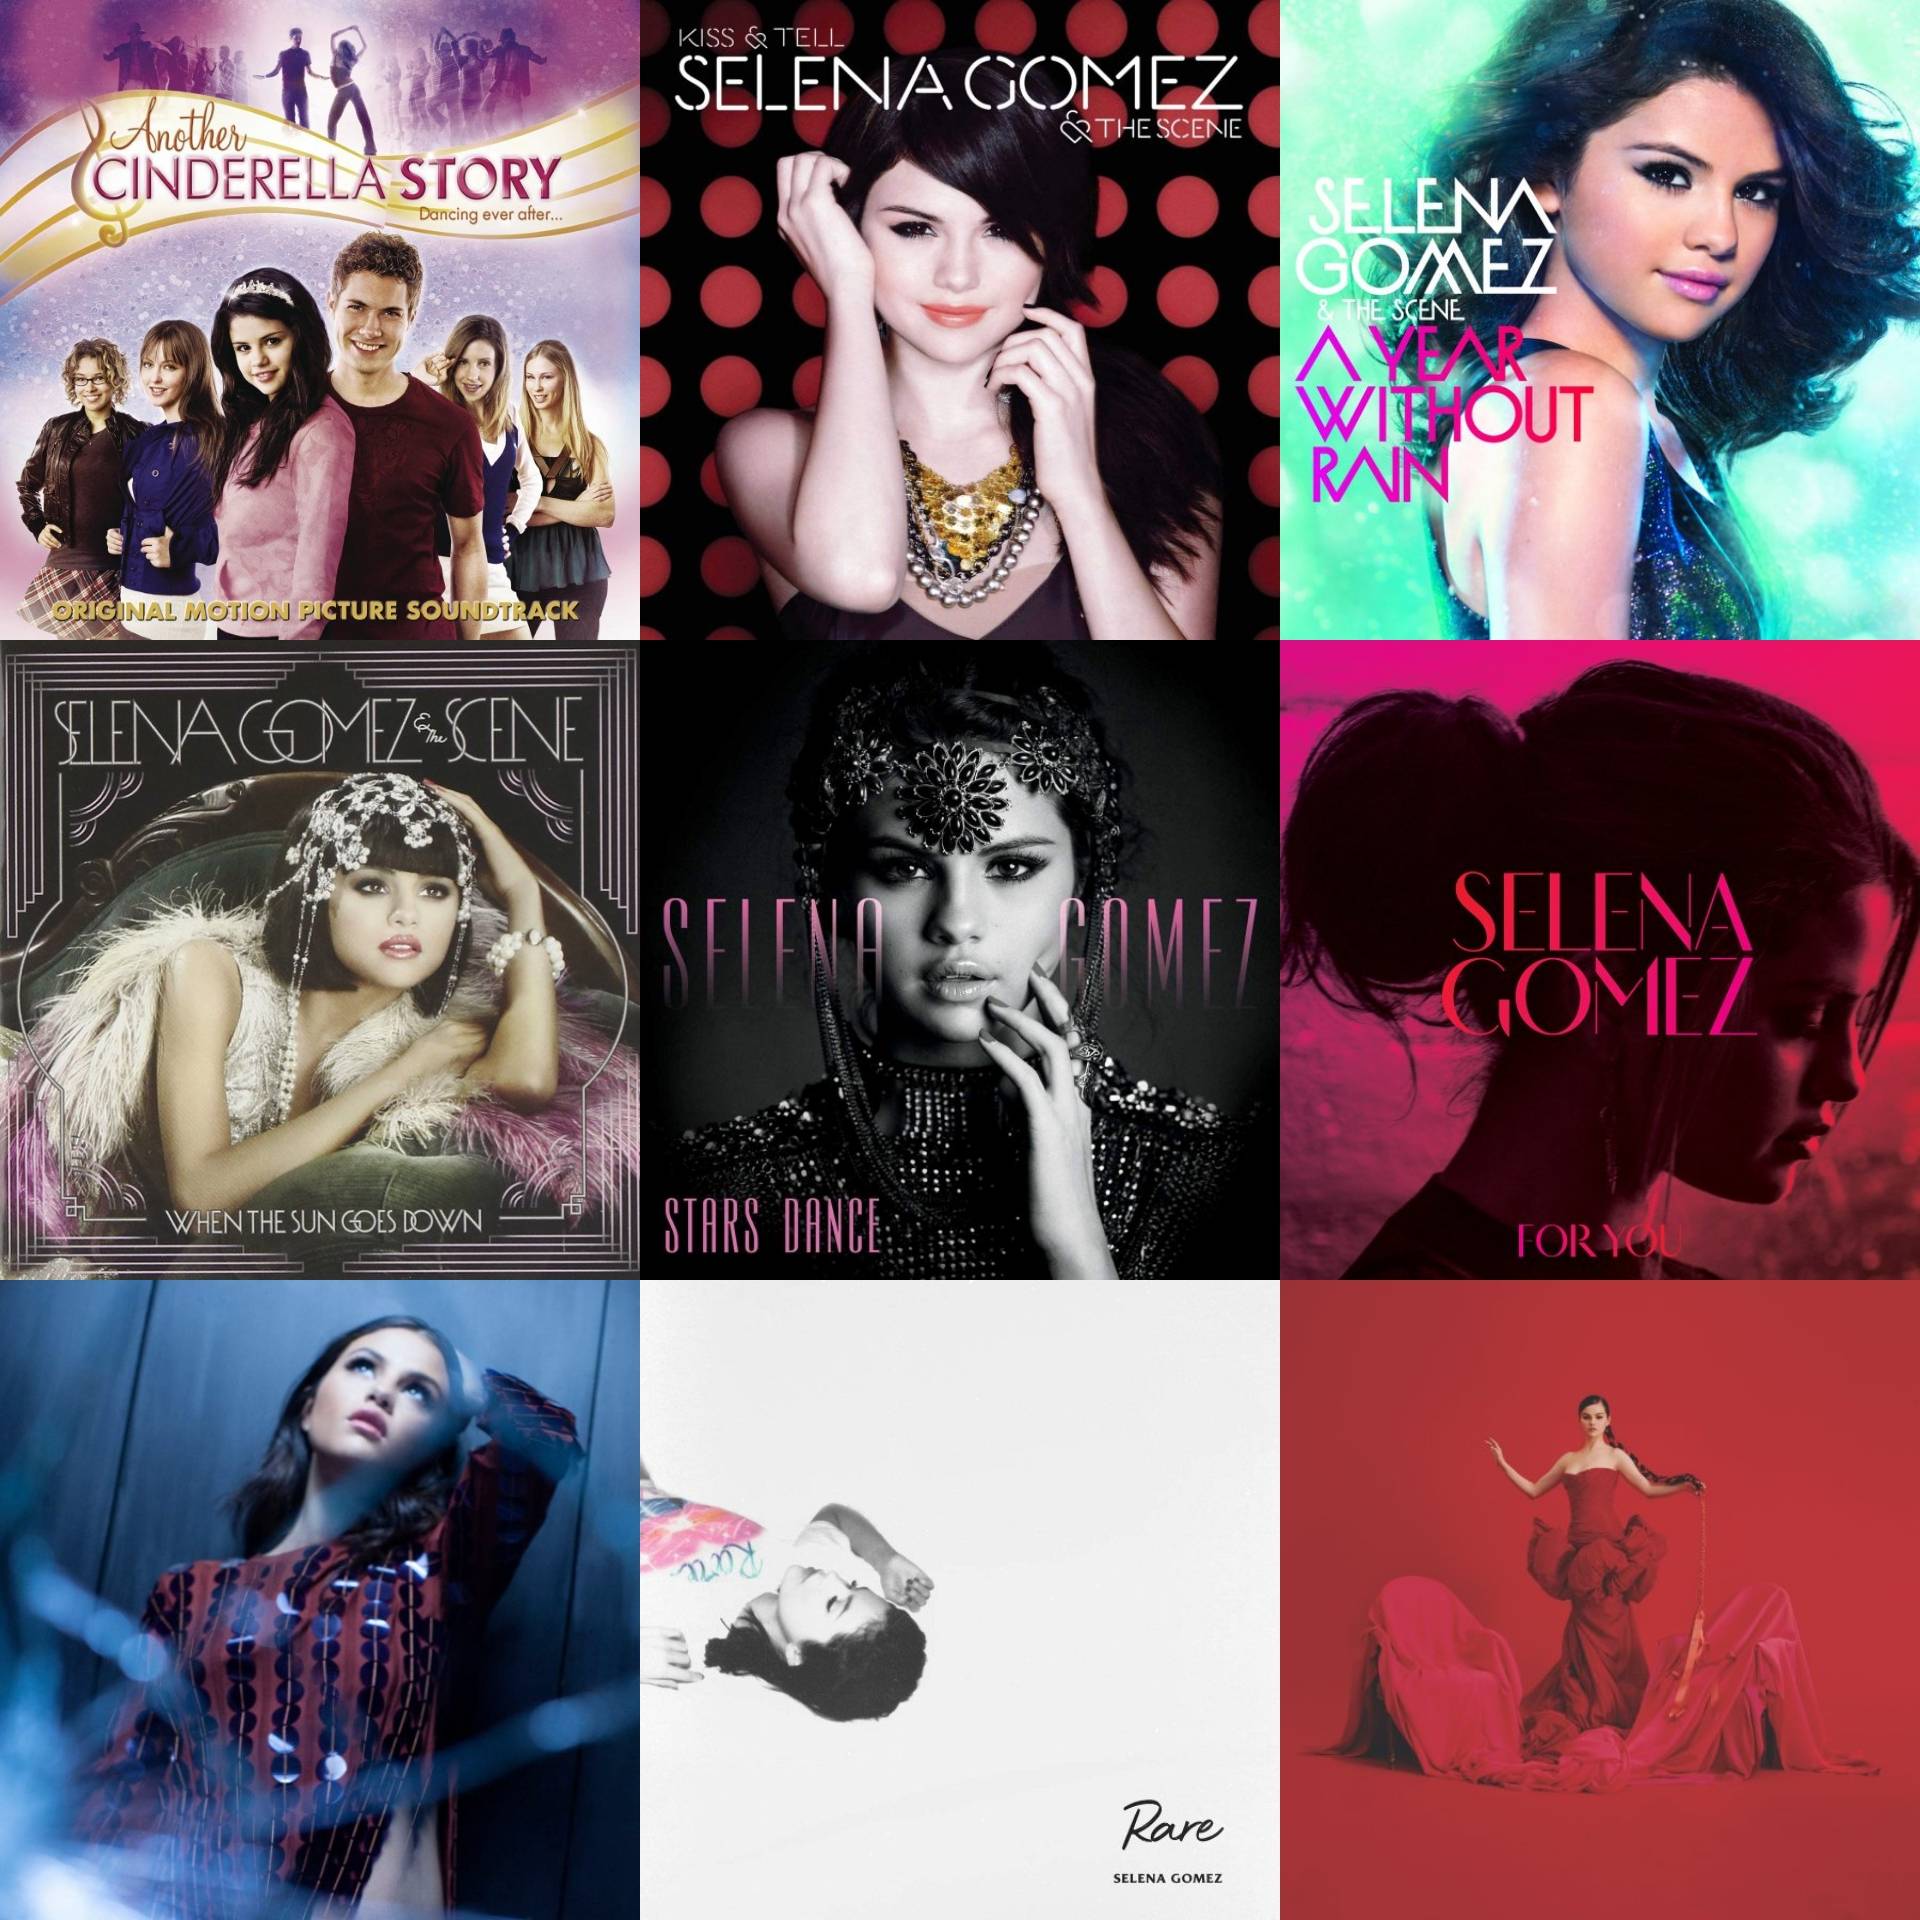 Selena Gomez Discography by AdrenalineRush1996 on DeviantArt